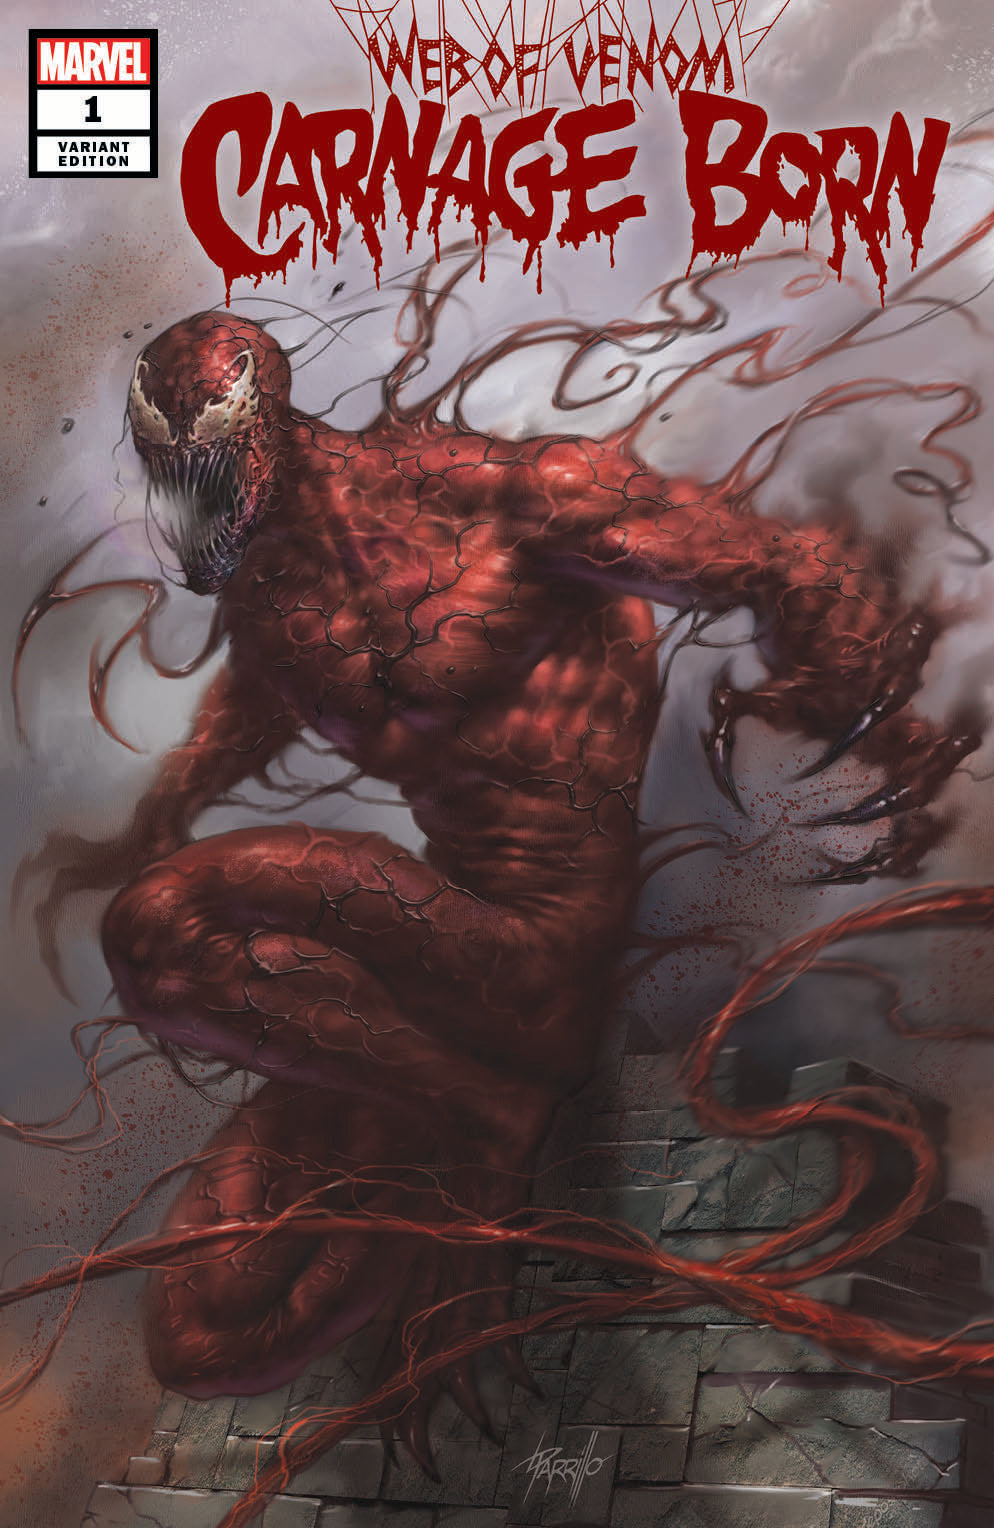 Web of Venom: Carnage Born #1 Parrillo Exclusive Variant